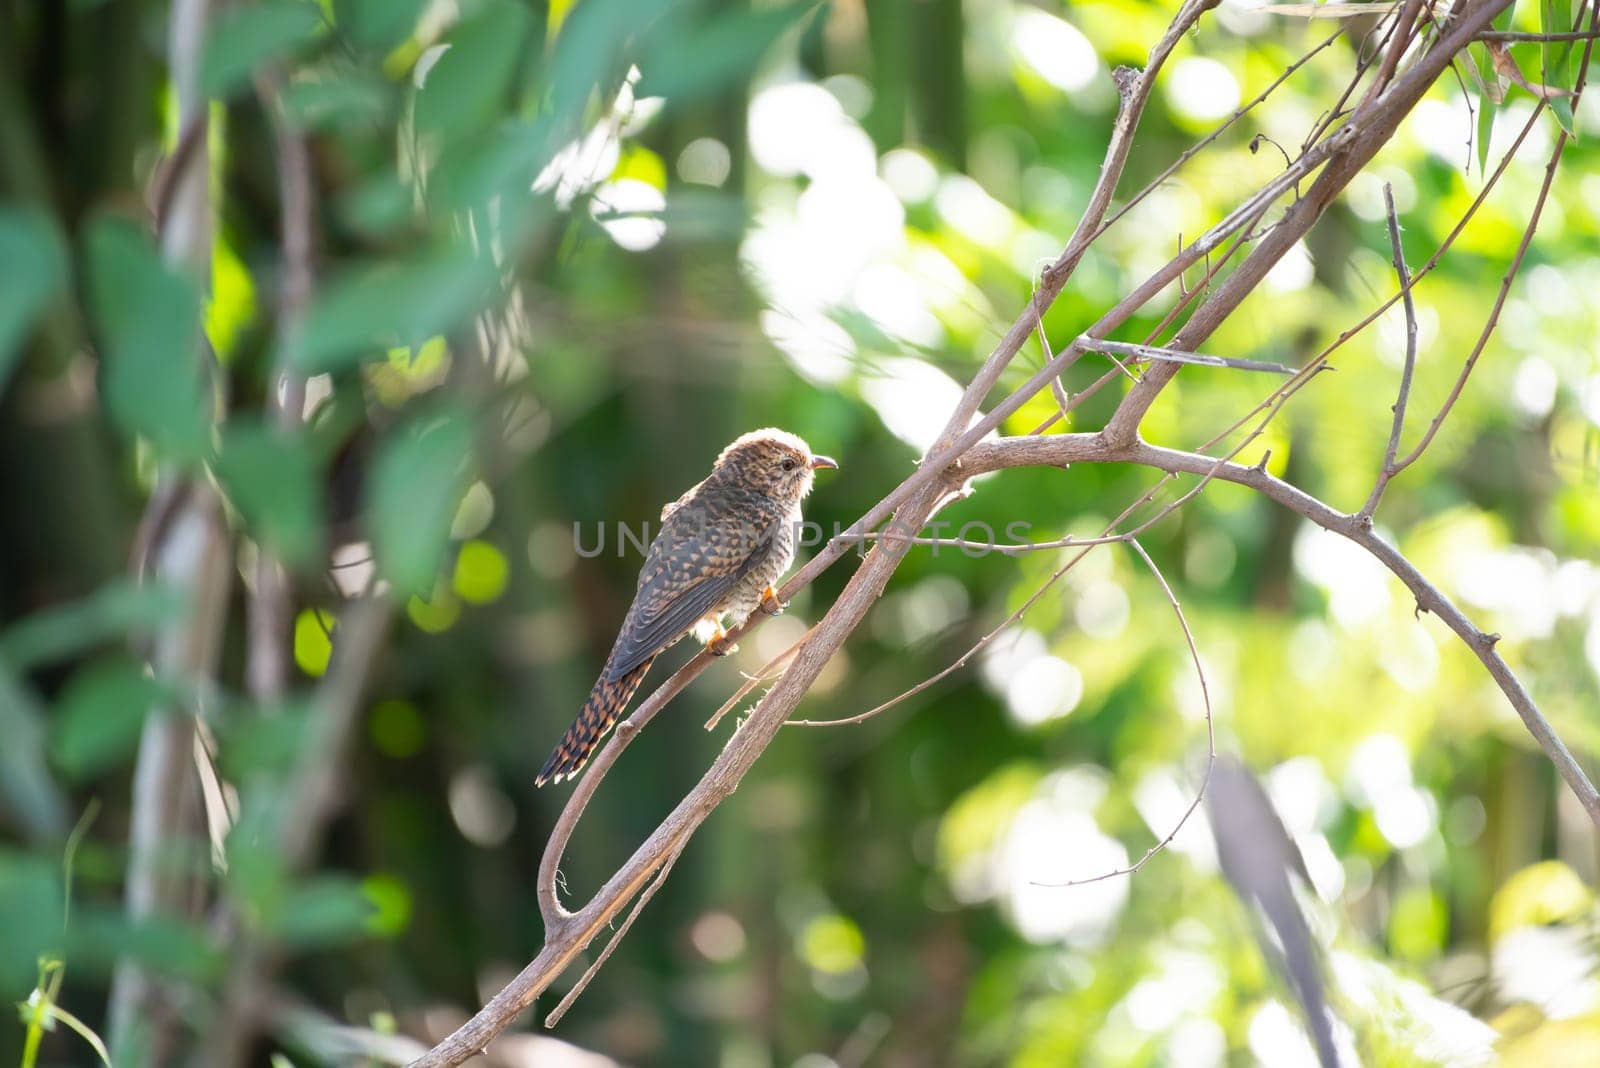 Bird (Plaintive Cuckoo) in a nature wild by PongMoji